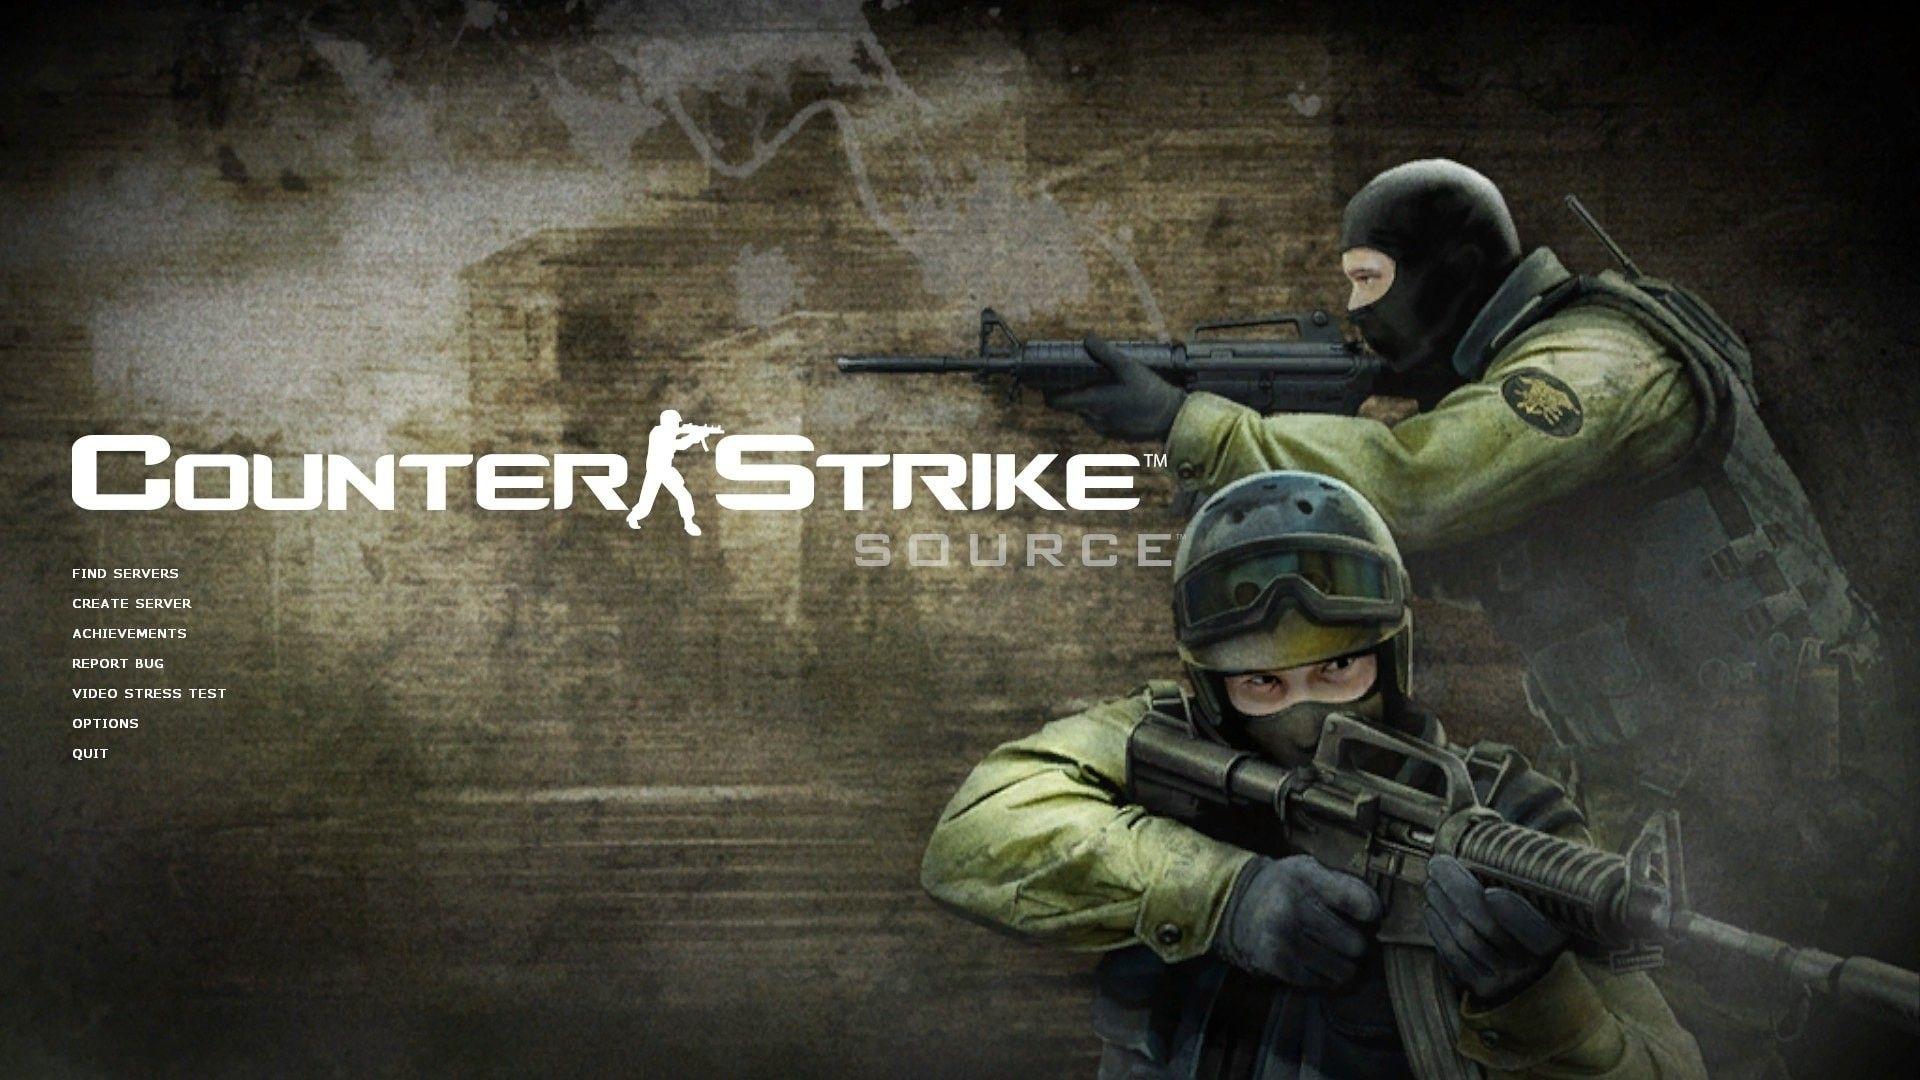 Counter Strike Source Wallpaper